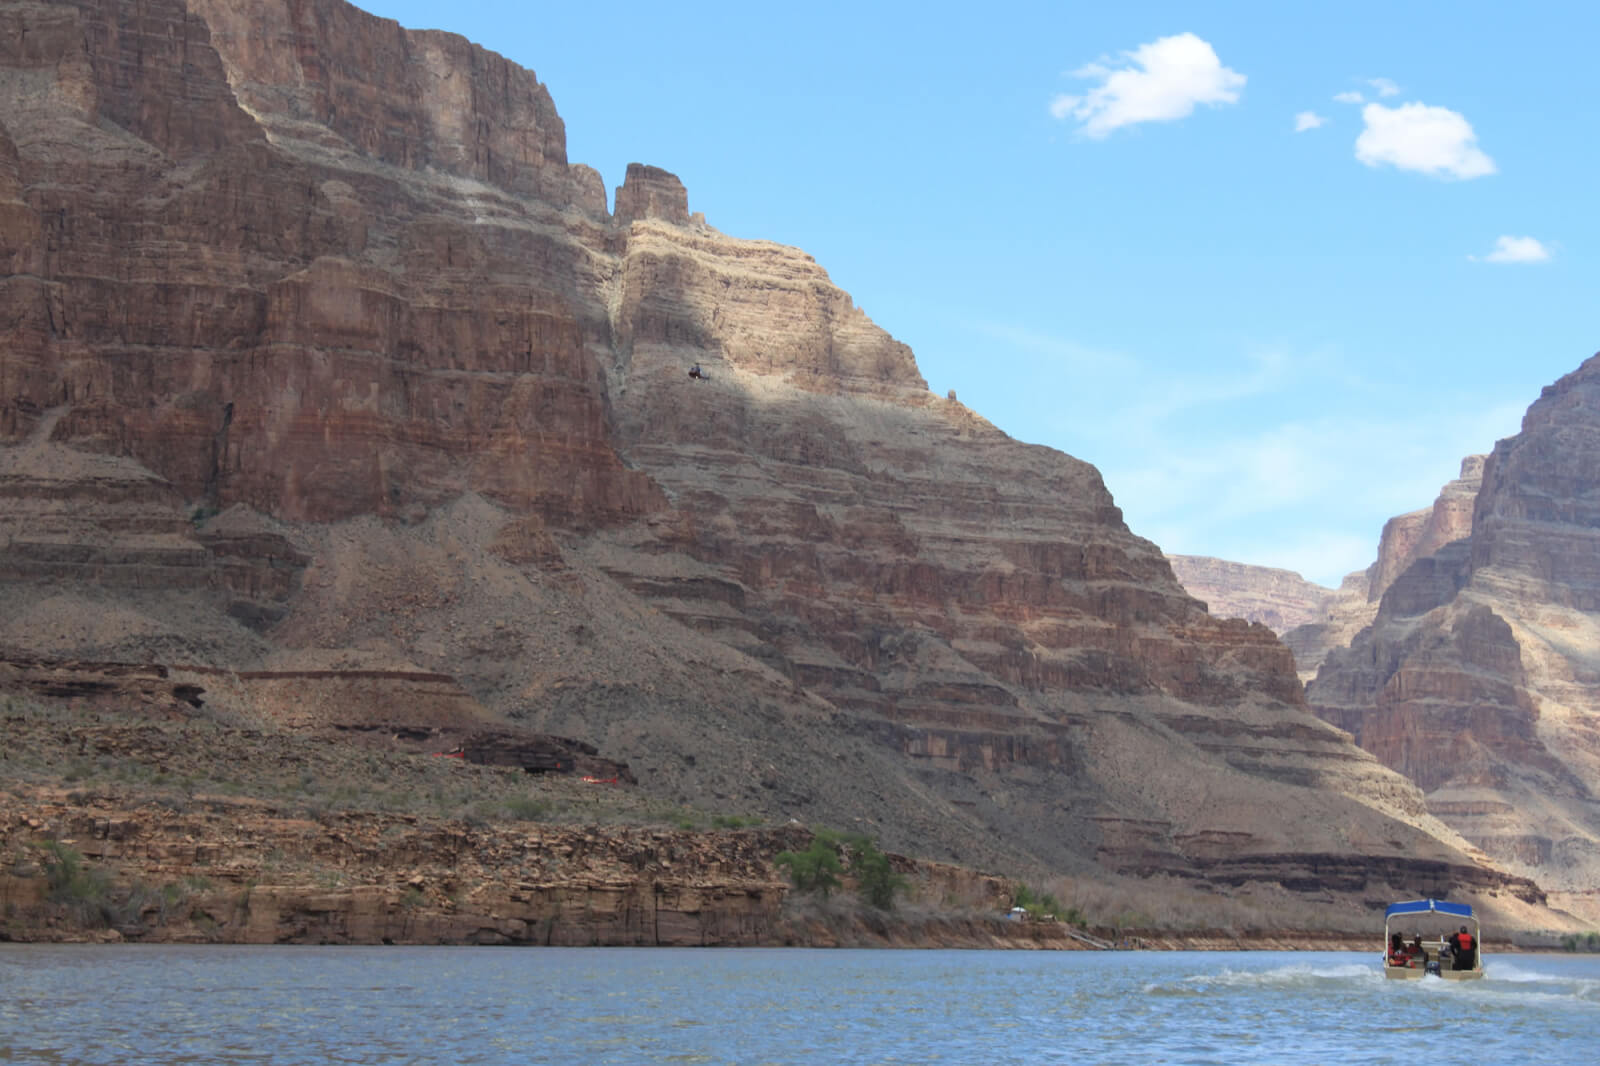 A river tour along the Colorado River at Grand Canyon West